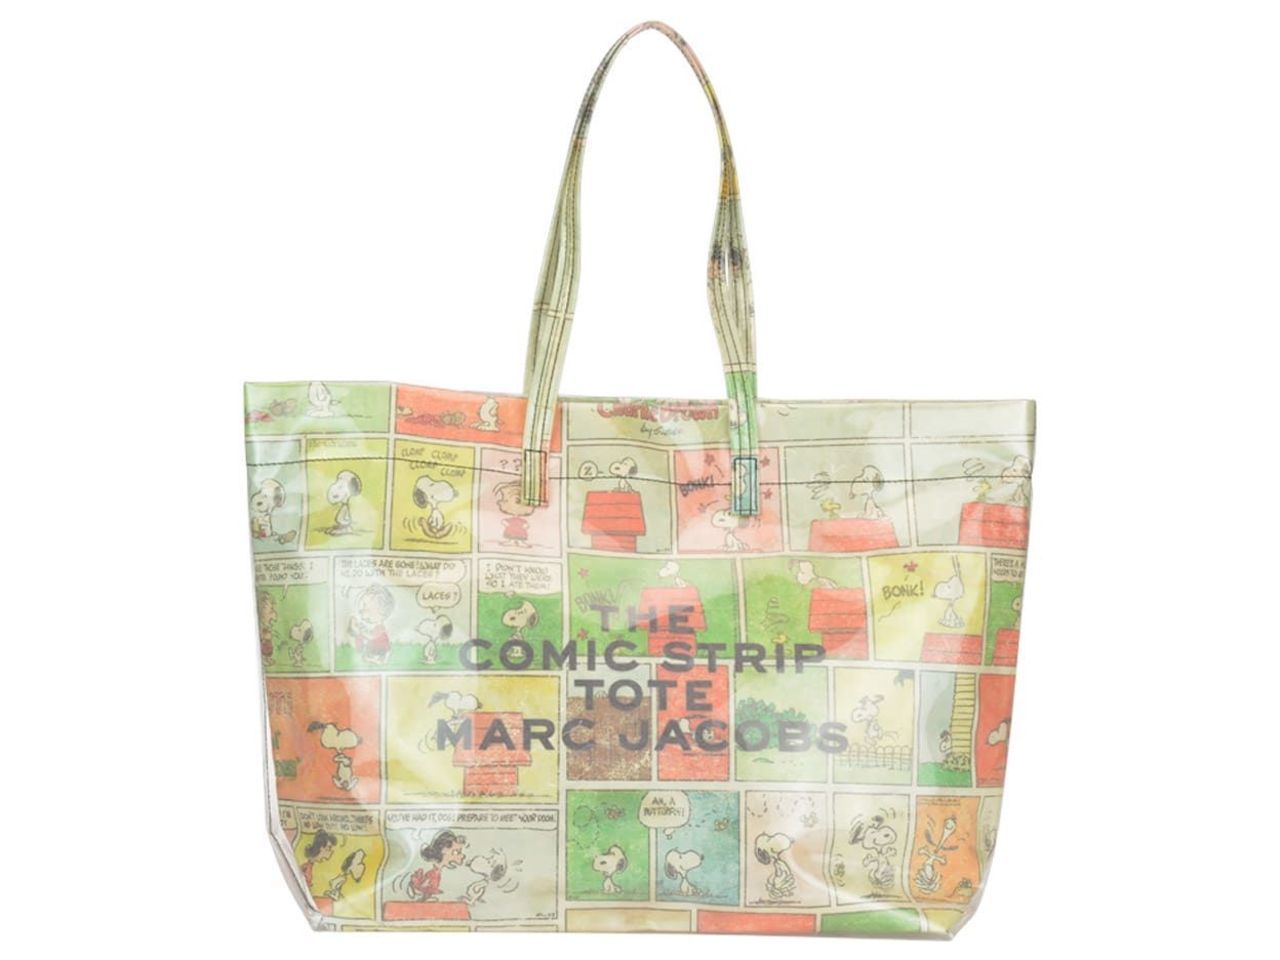 Marc Jacobs The Comic Stripe Tote Shopping Bag